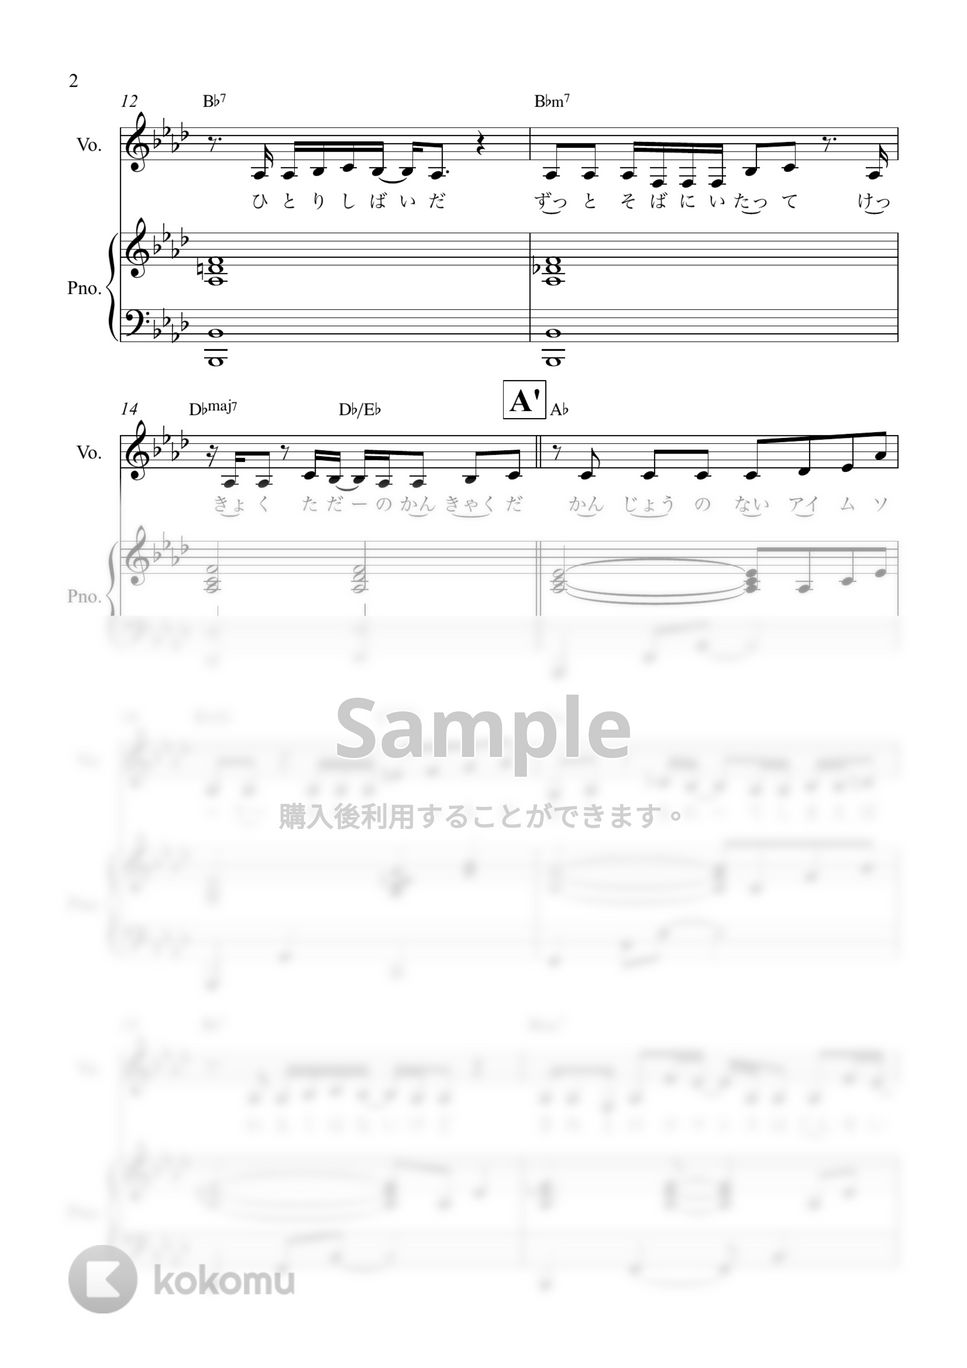 Official髭男dism - Pretender (ピアノ弾き語り) by 泉宏樹